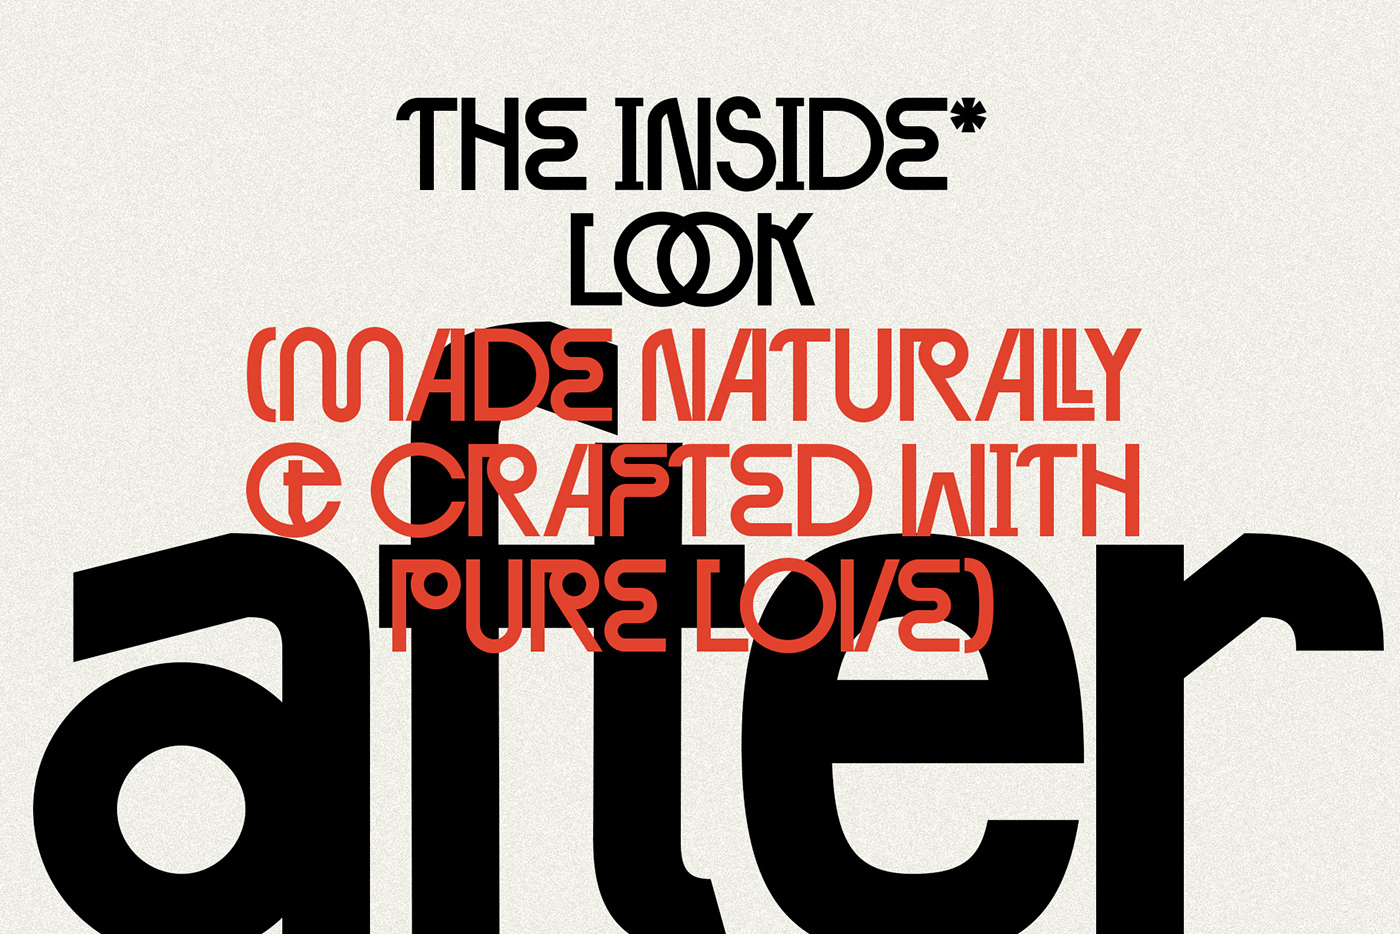 baroque geometric Typeface font elegant versatile design typography   contemporary орнамент